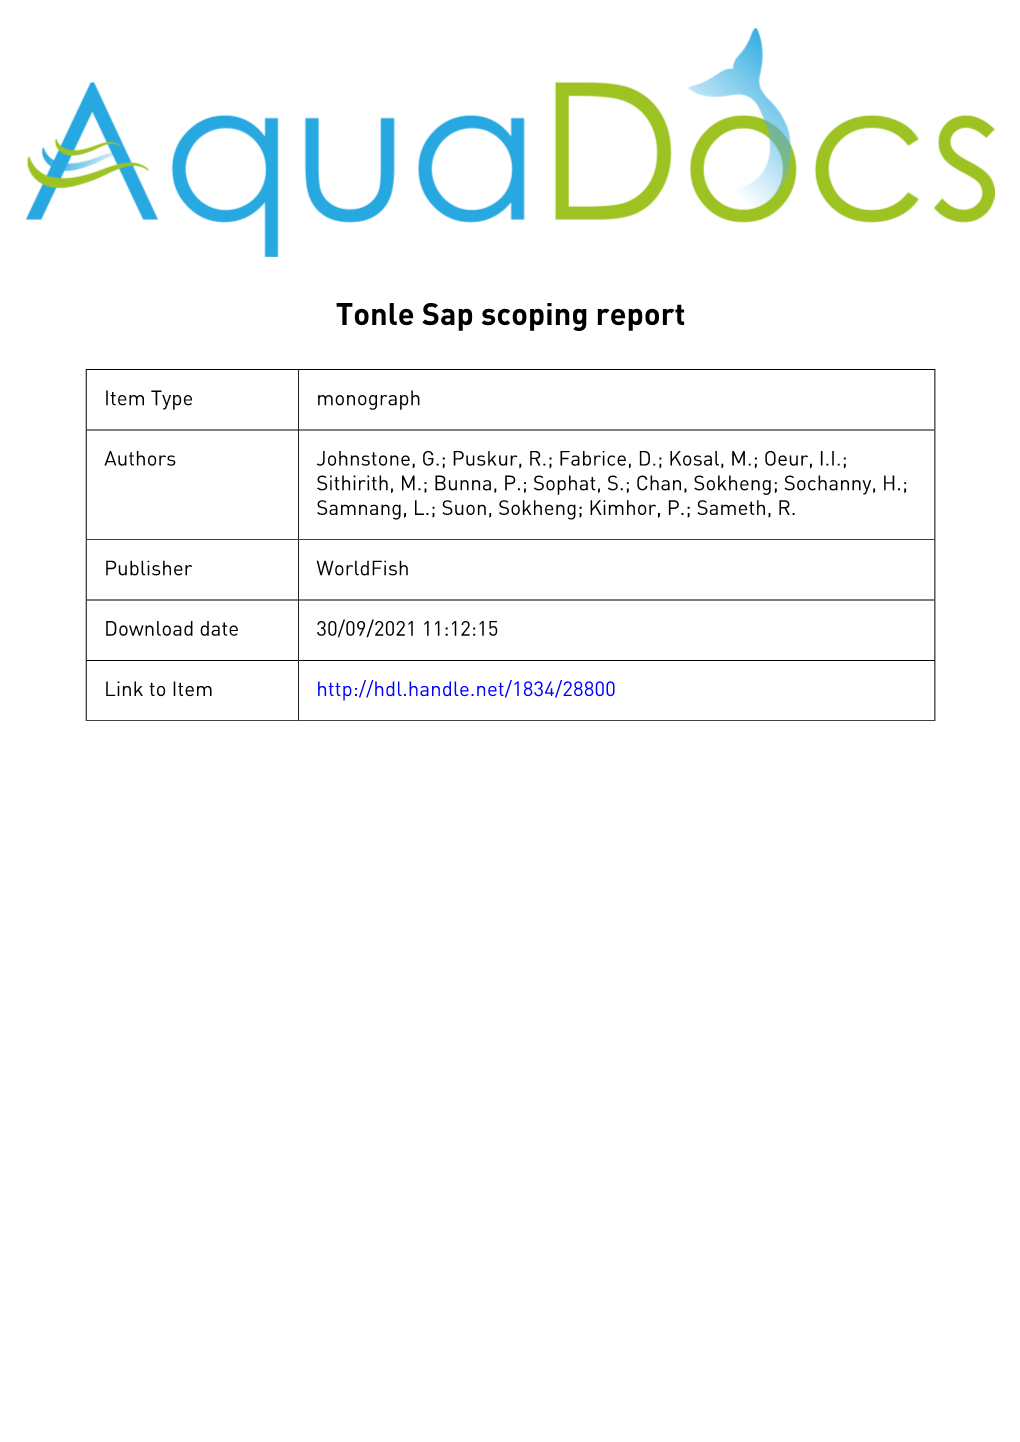 Tonle Sap Scoping Report